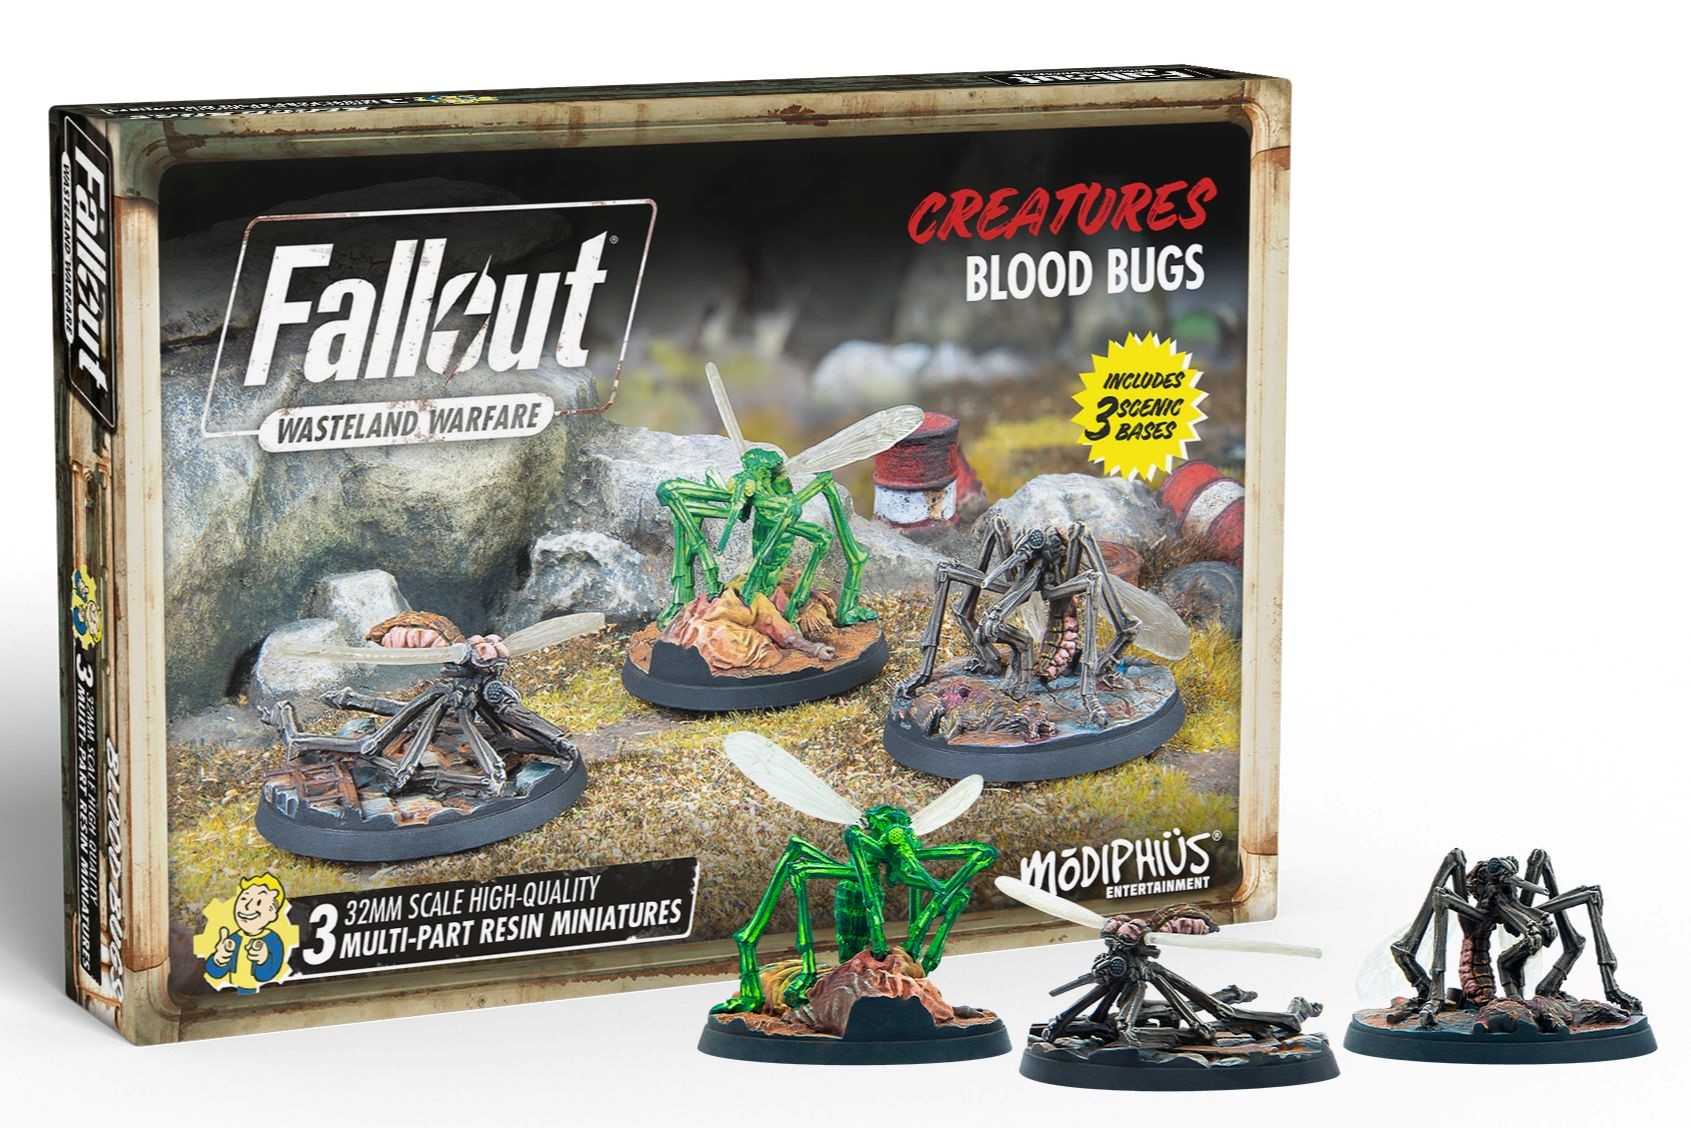 Fallout: Wasteland Warfare: Creatures Blood Bugs 